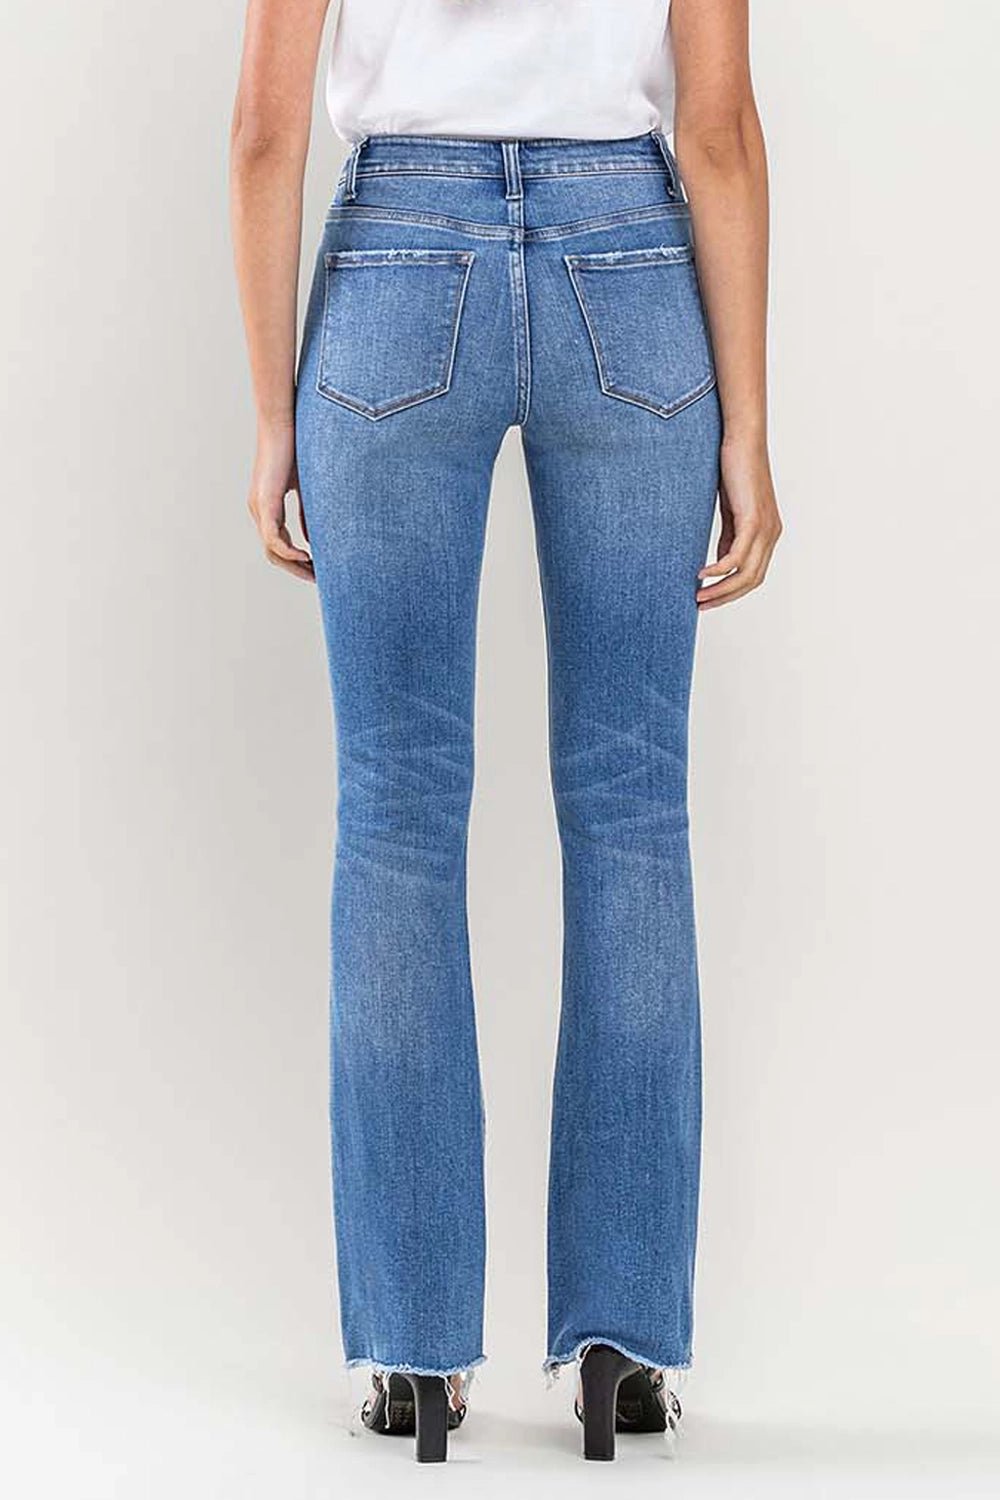 Cherish Seam Detail Bootcut Jeans | Vervet by Flying Monkey | T6088 - Lavender Hills BeautyVervet